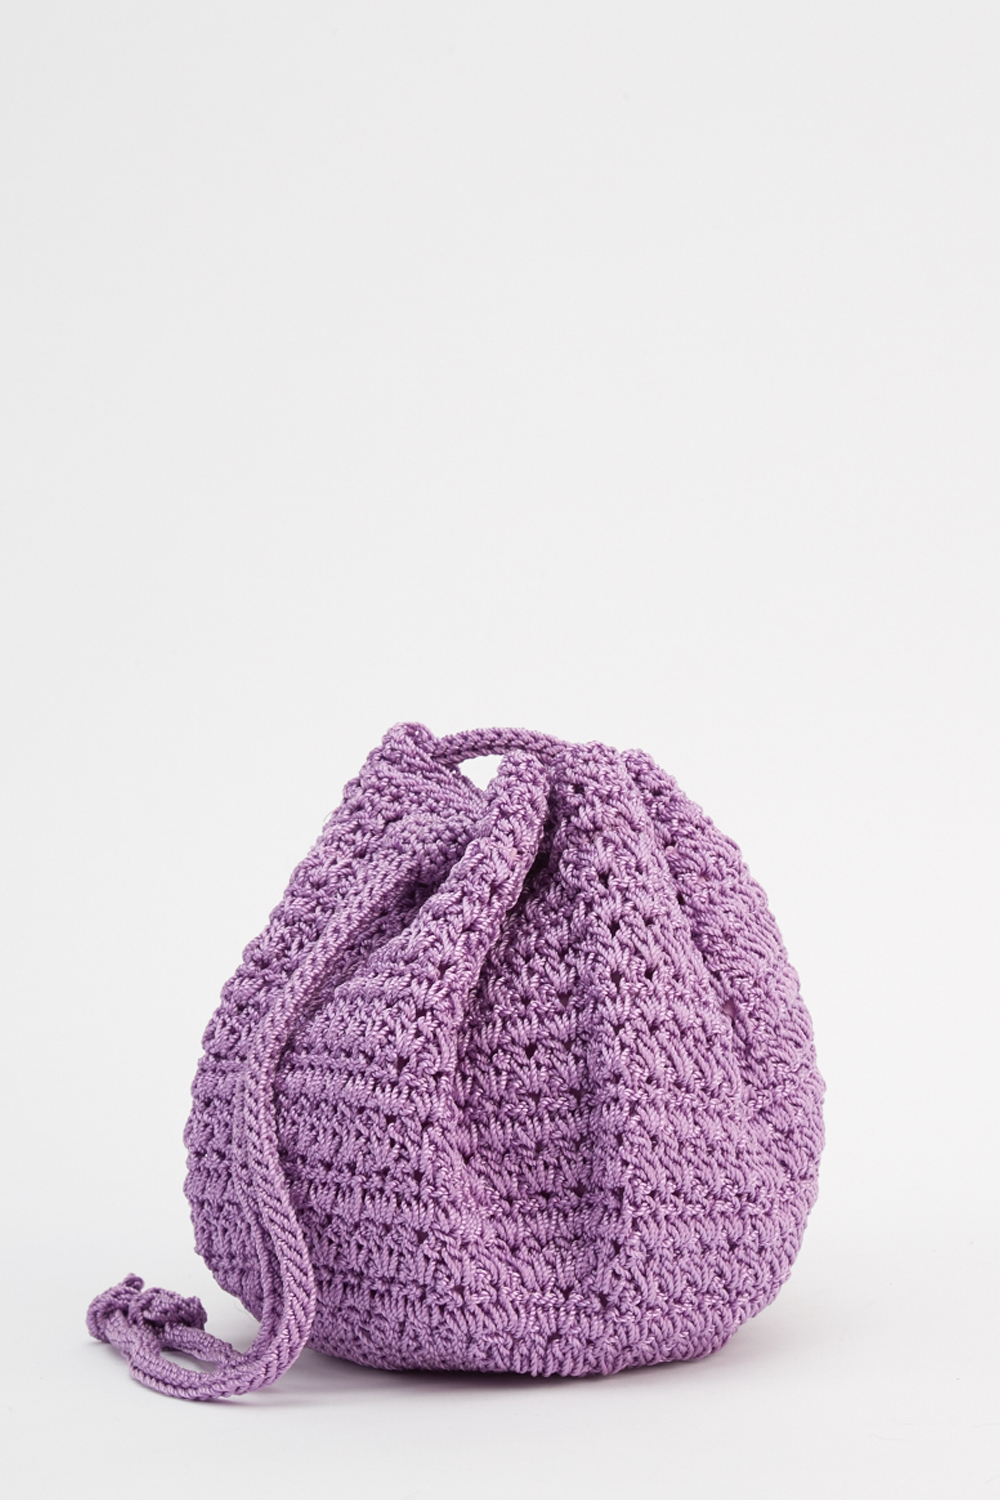 Crochet Small Pouch Shoulder Bag - Just $6